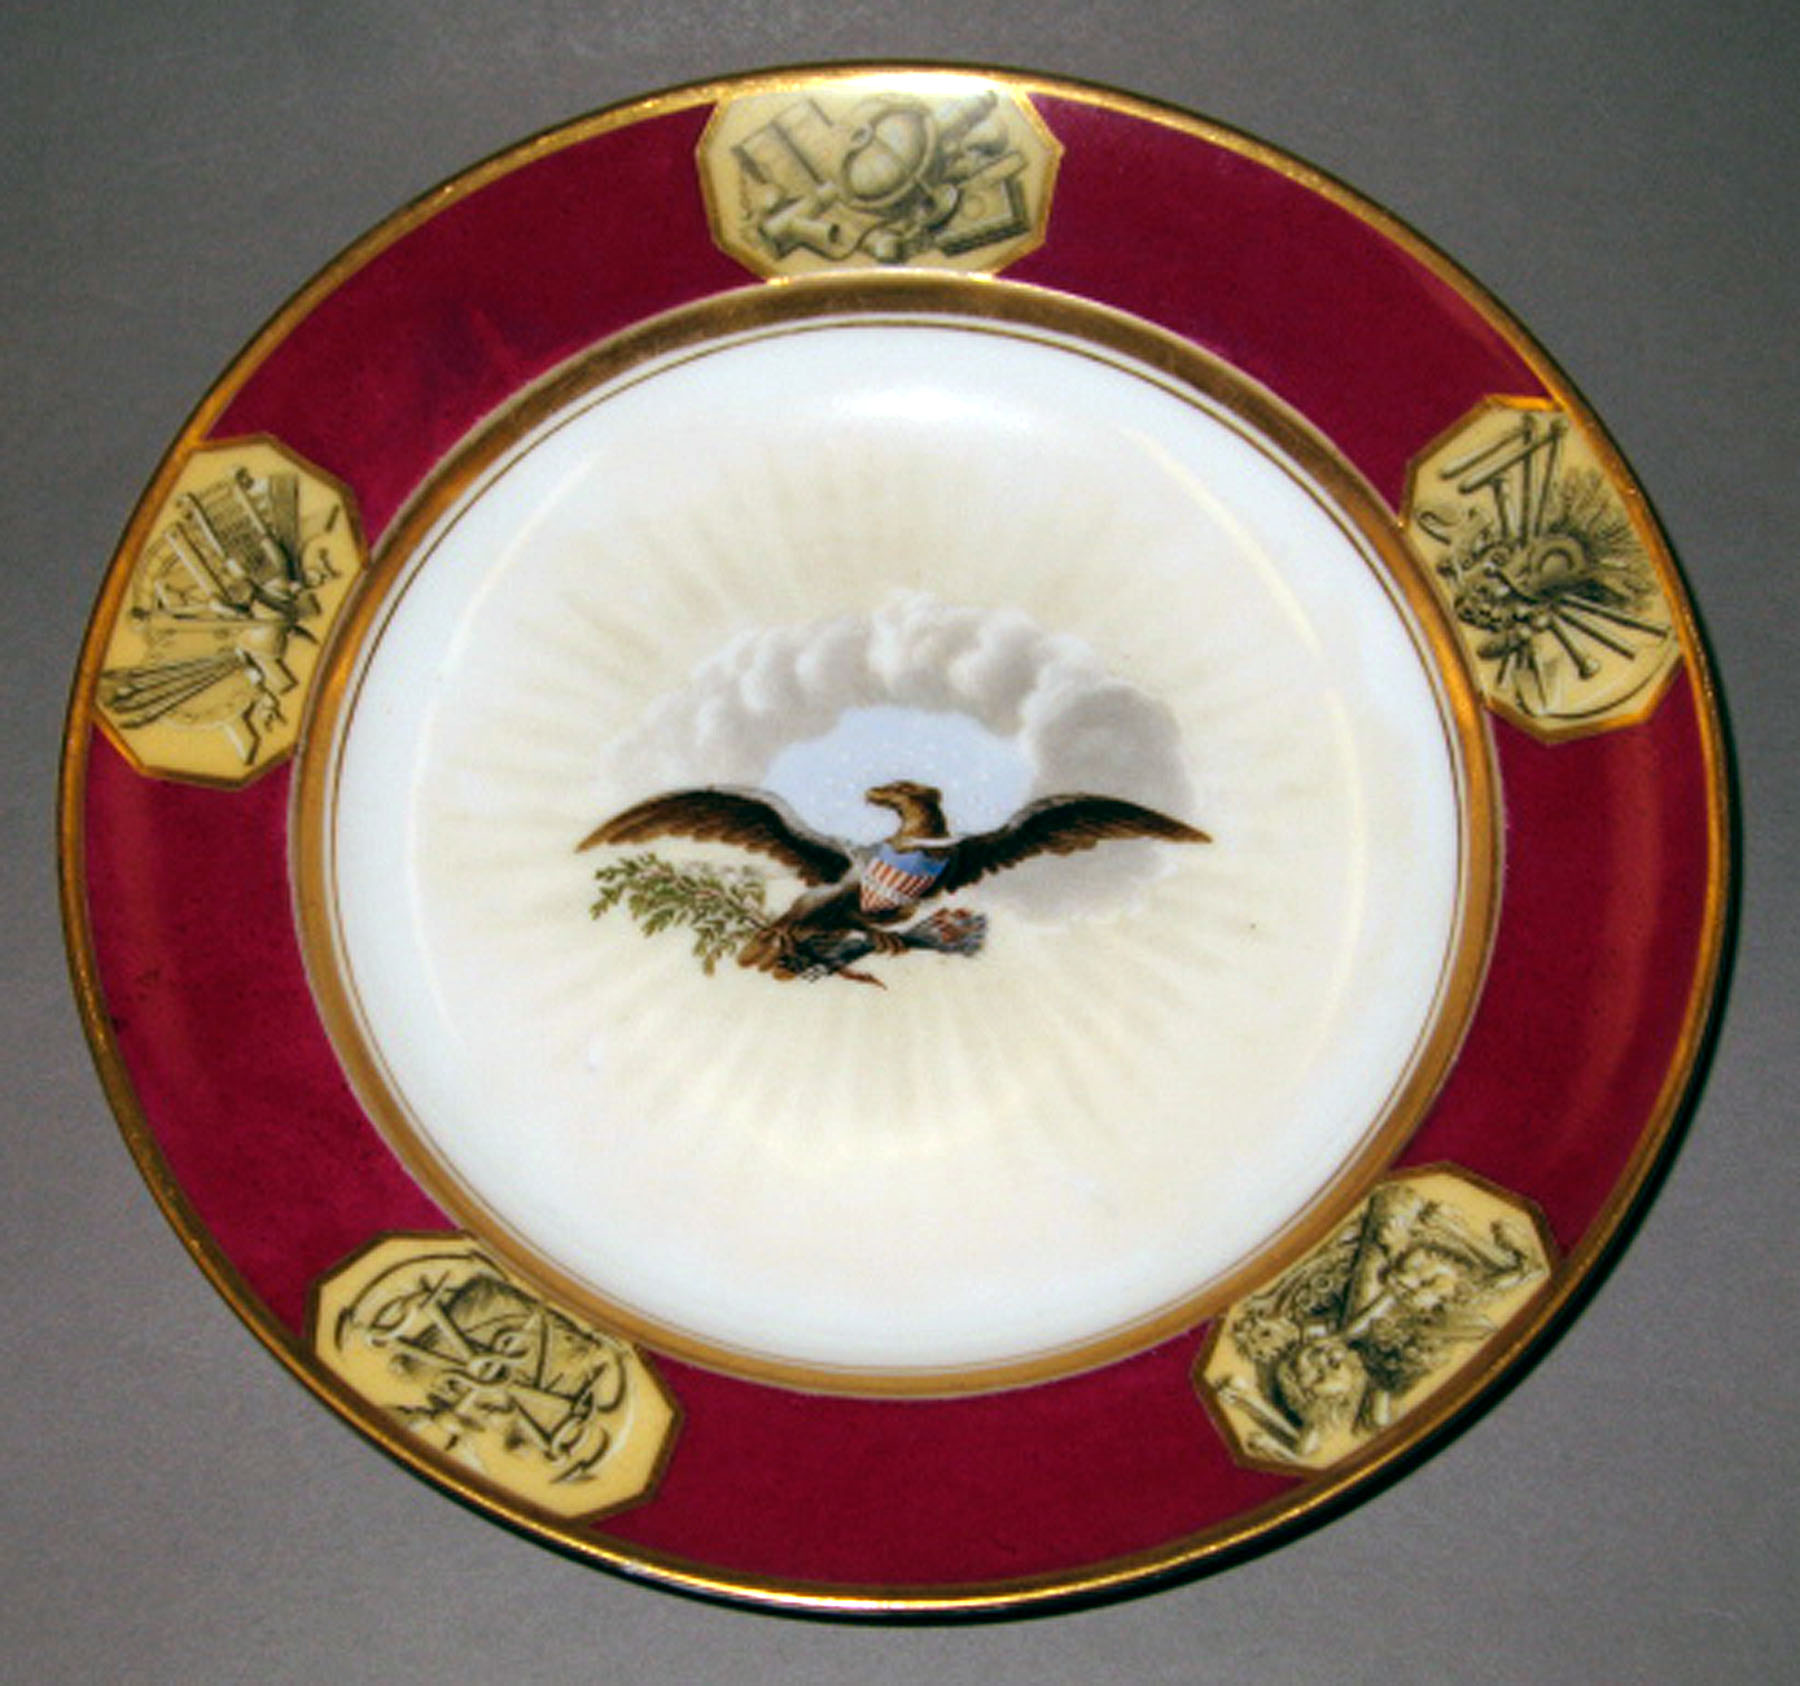 1958.1606.039 Porcelain plate